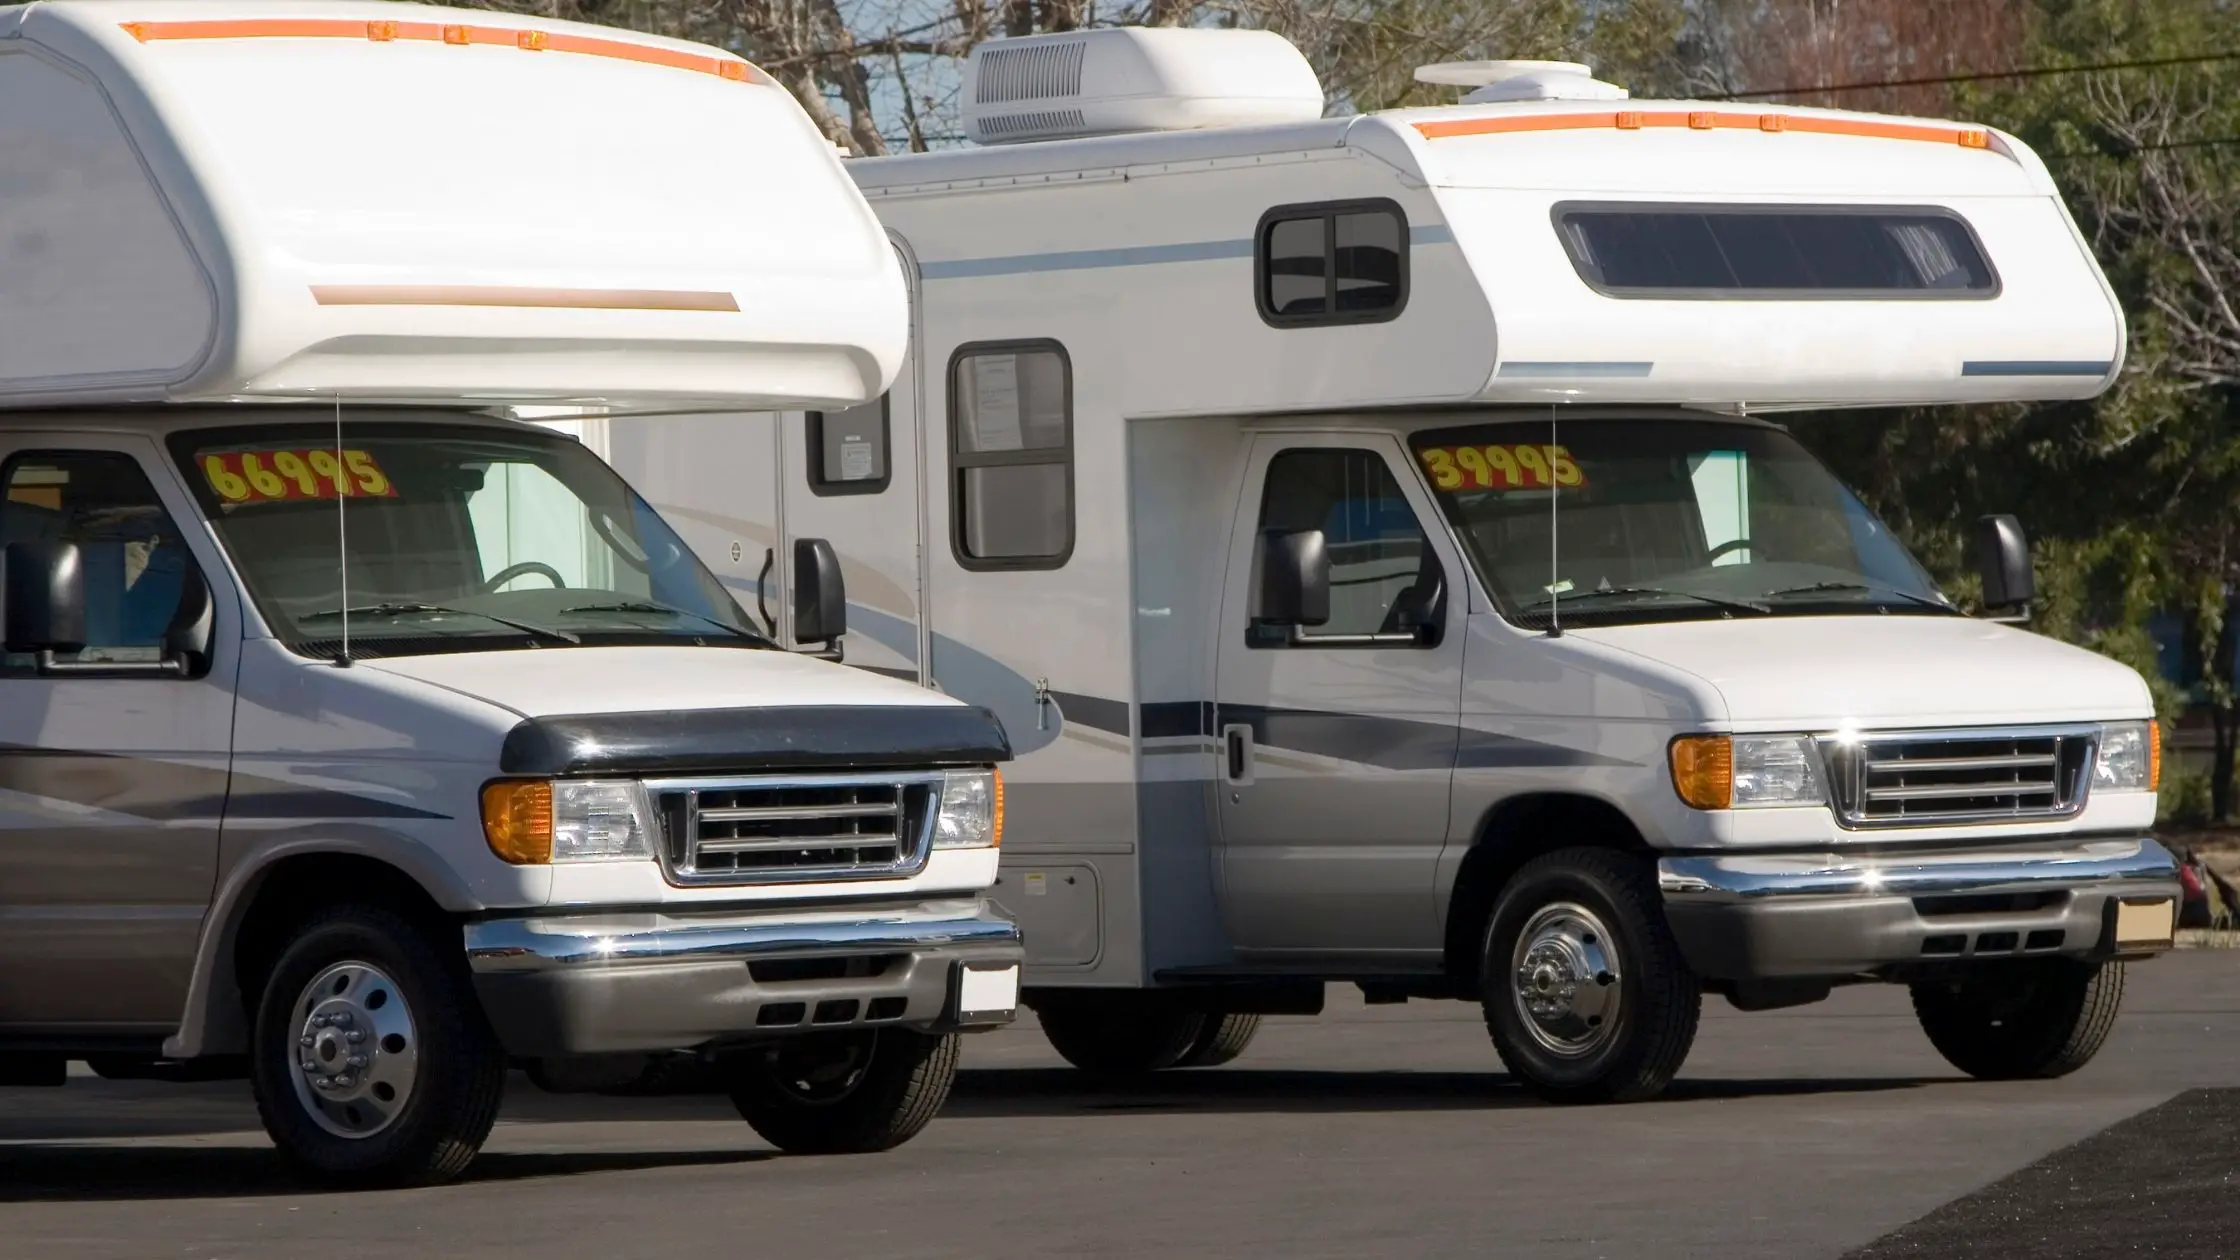 Does Camping World Take Car Trade-Ins?